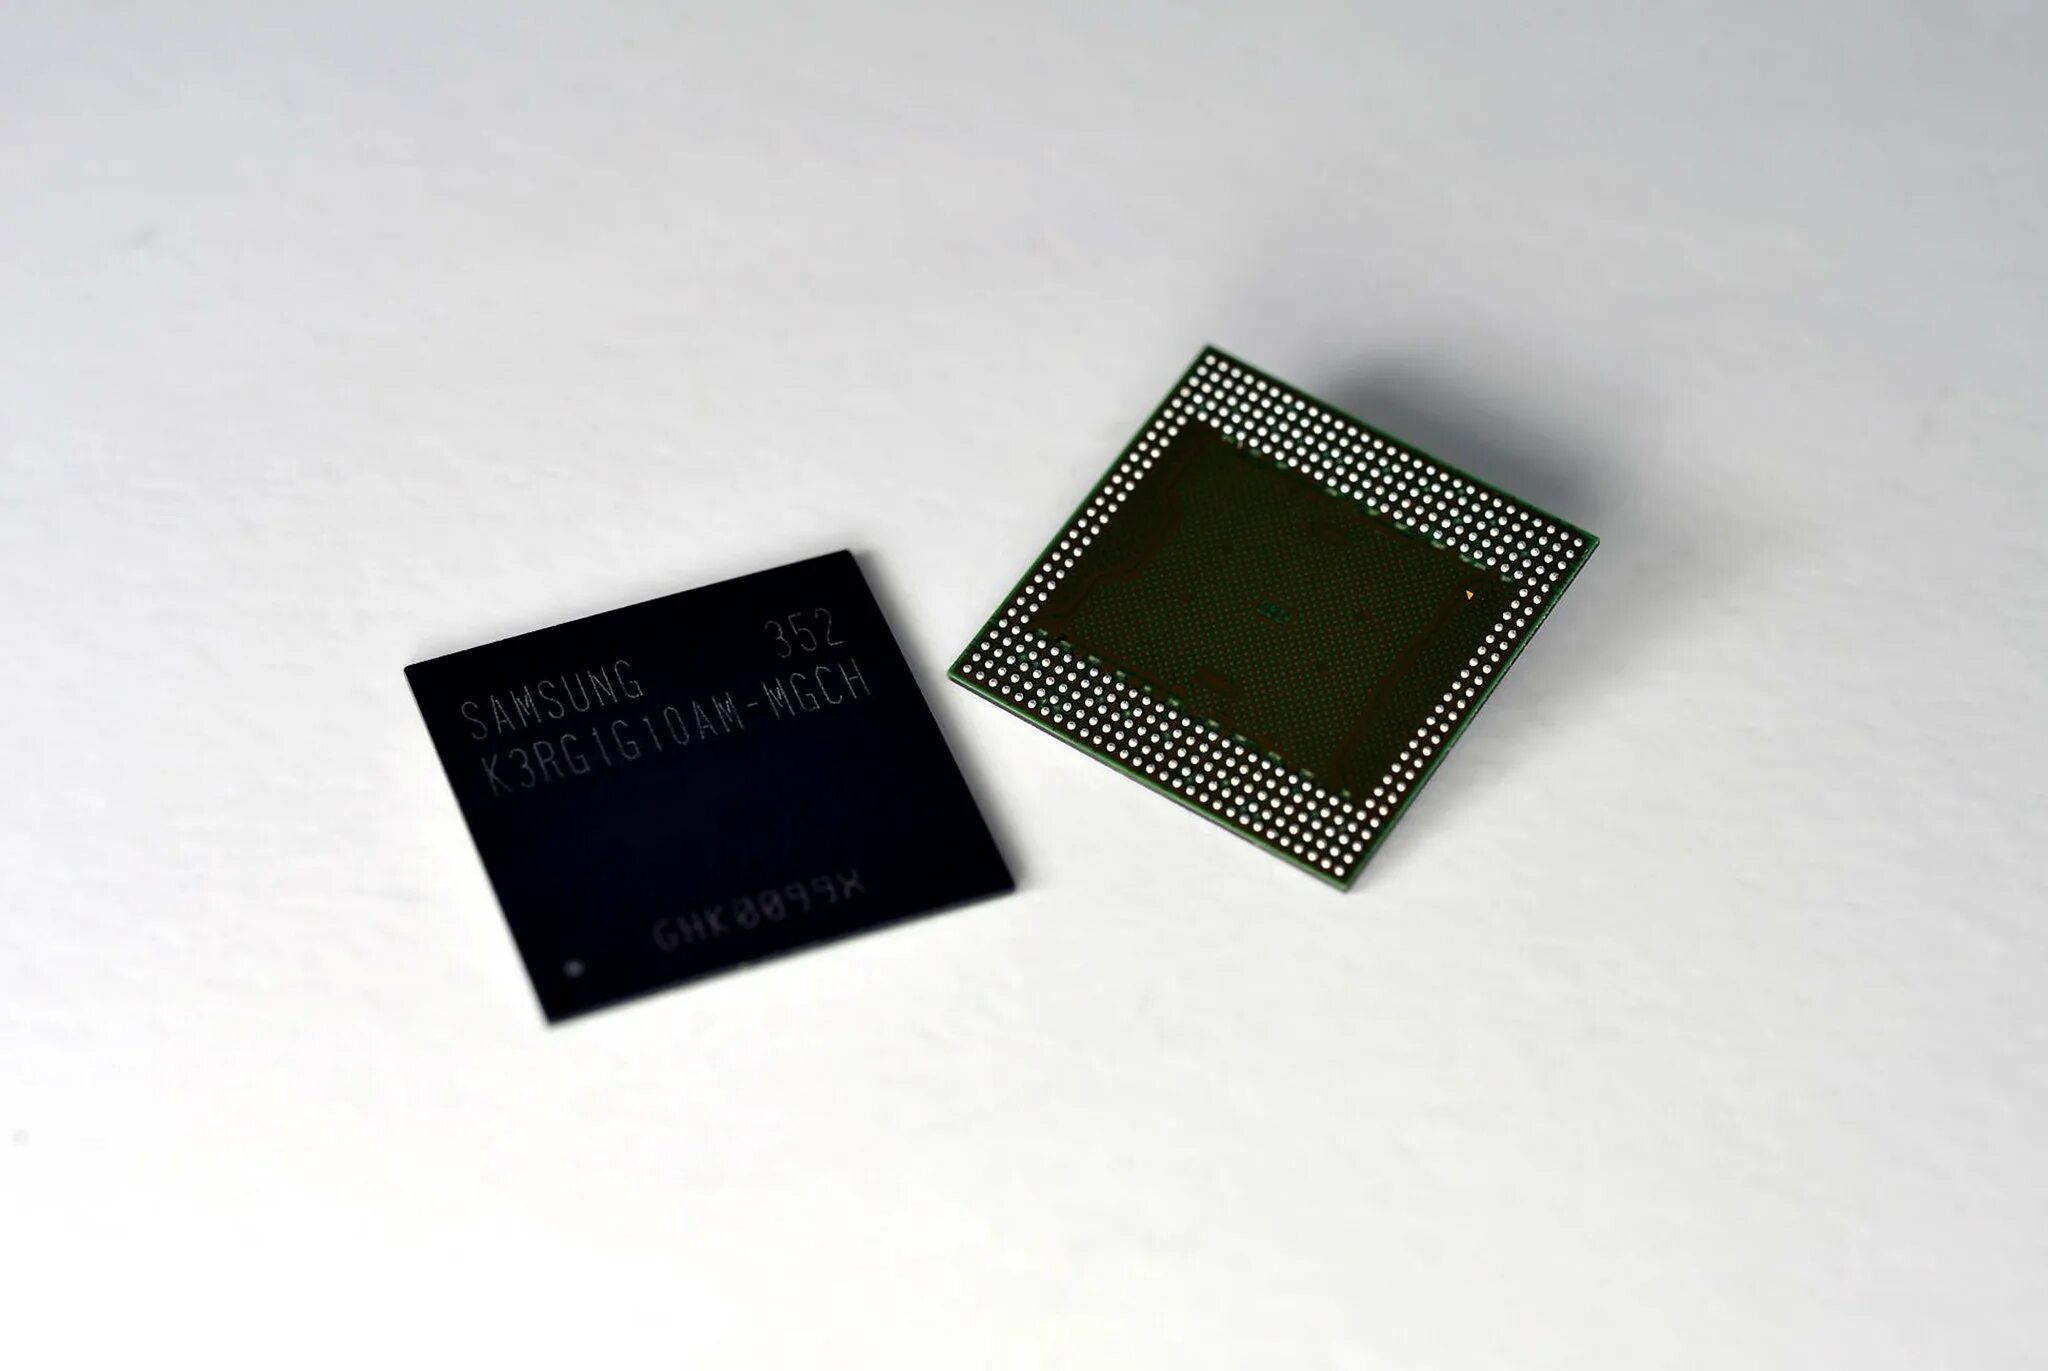 Samsung lpddr4. Чипы памяти Samsung. Чип памяти gddr5 Hynix. Micron lpddr4. Чип памяти samsung